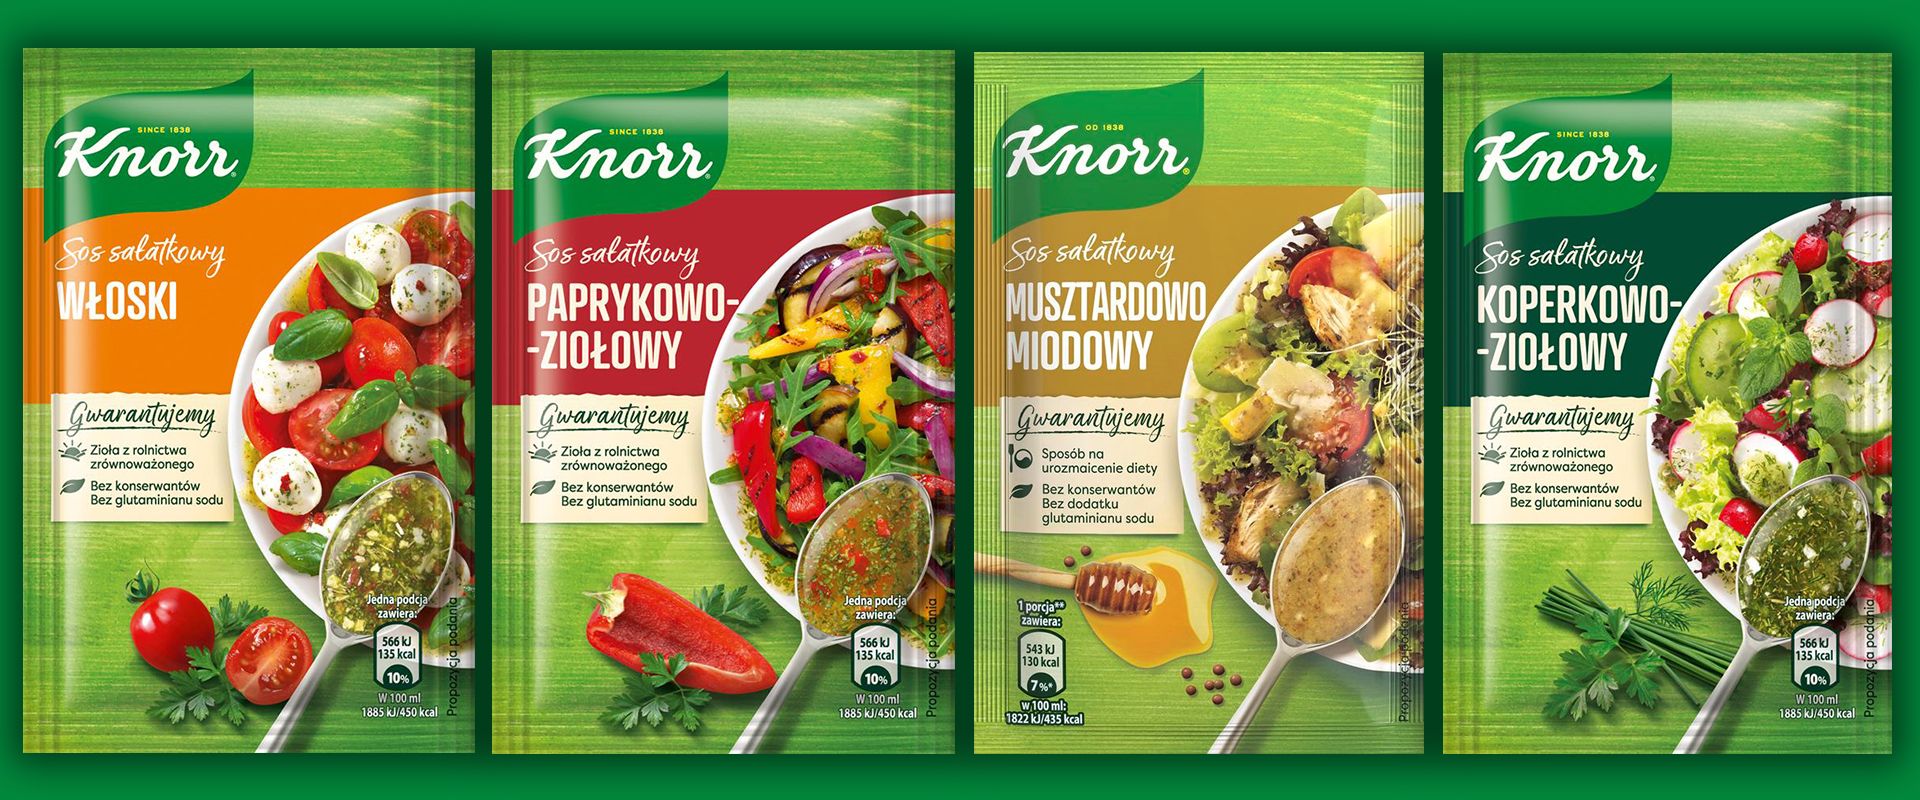 Sos Knorr - Nowosciproduktowe.pl